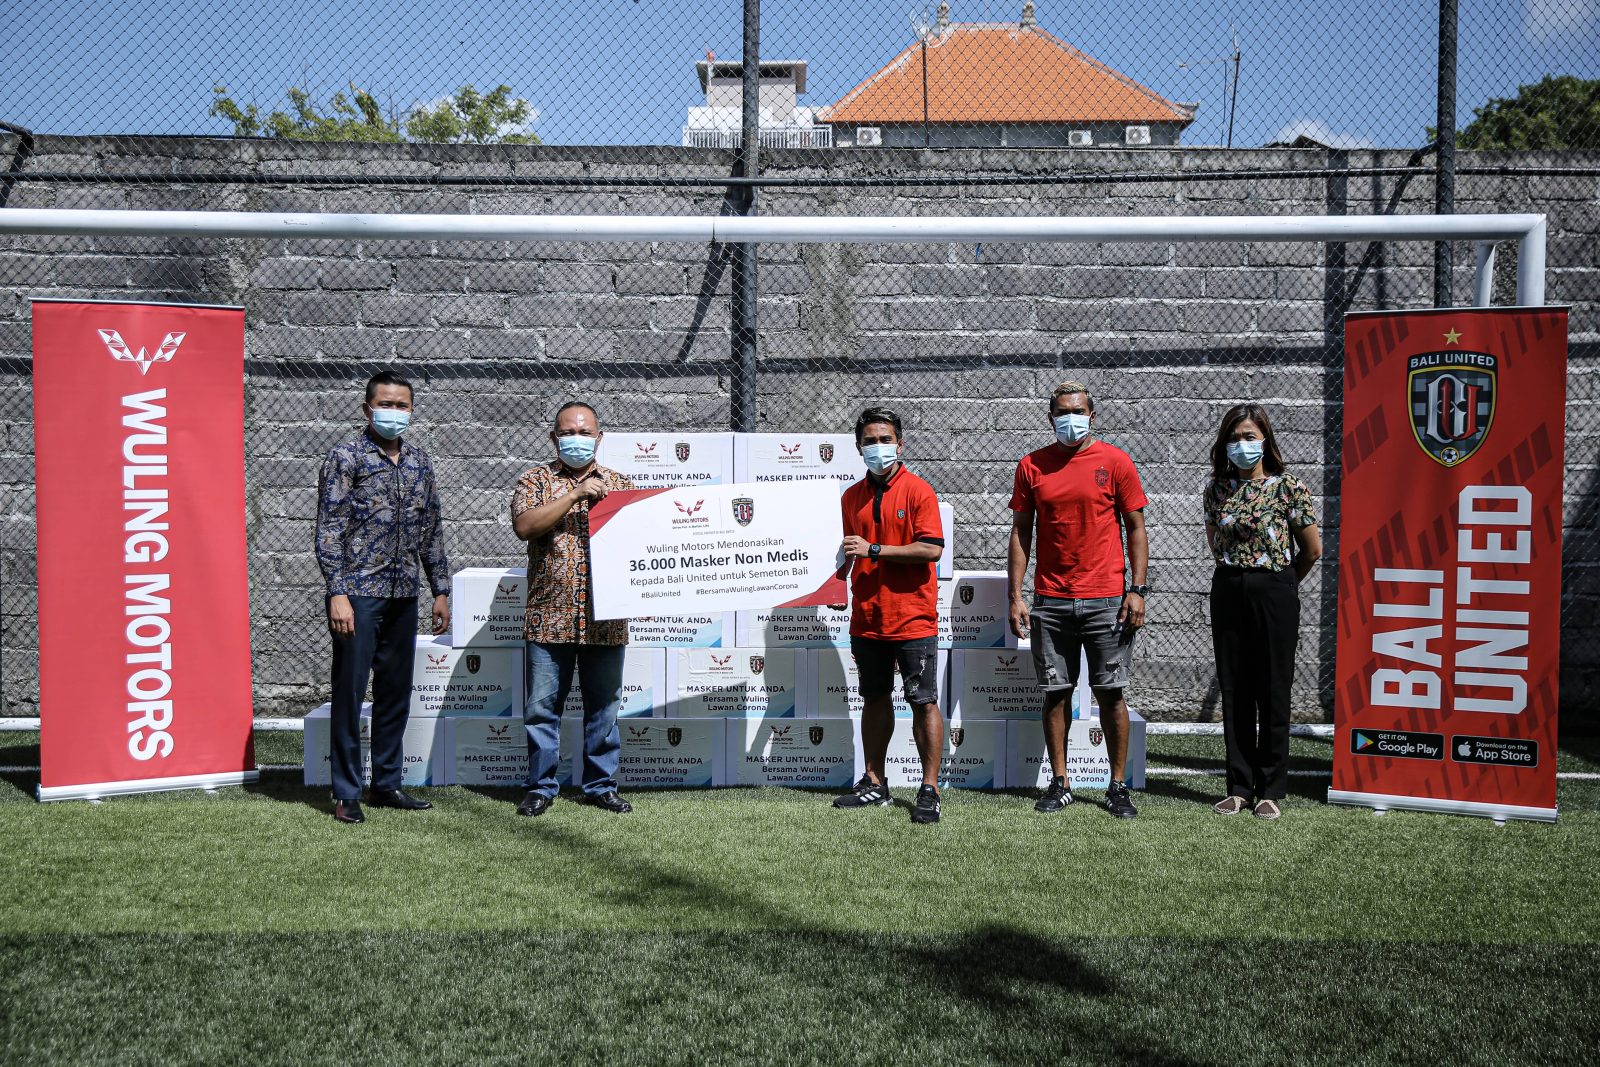 Image Together with Bali United, Wuling Donates 36.000 Non-Medical Masks to Semeton Bali